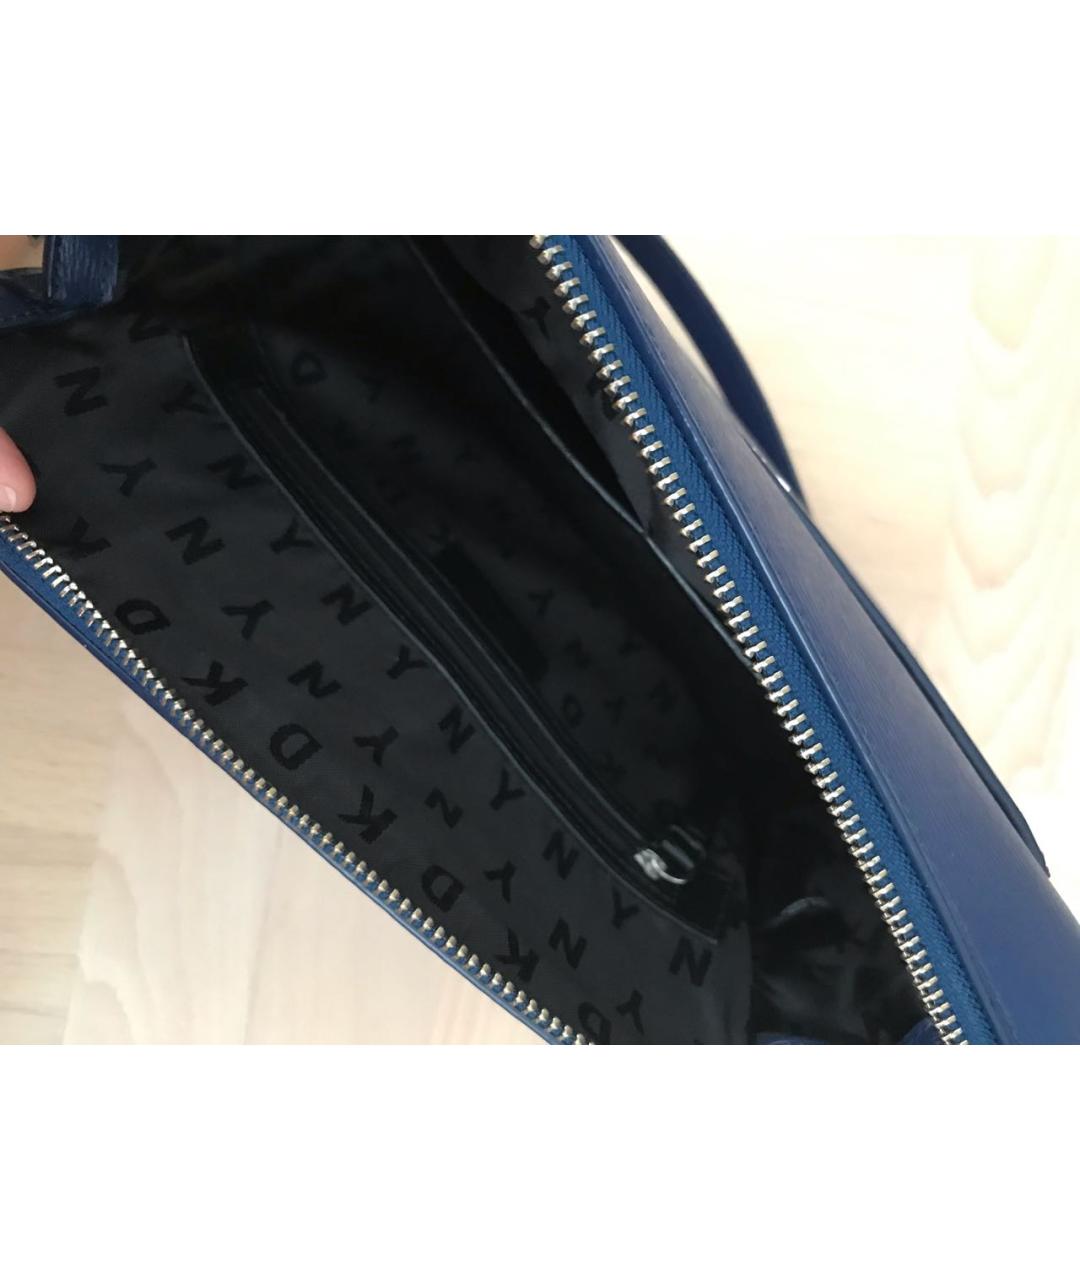 DKNY Синяя кожаная сумка через плечо, фото 2